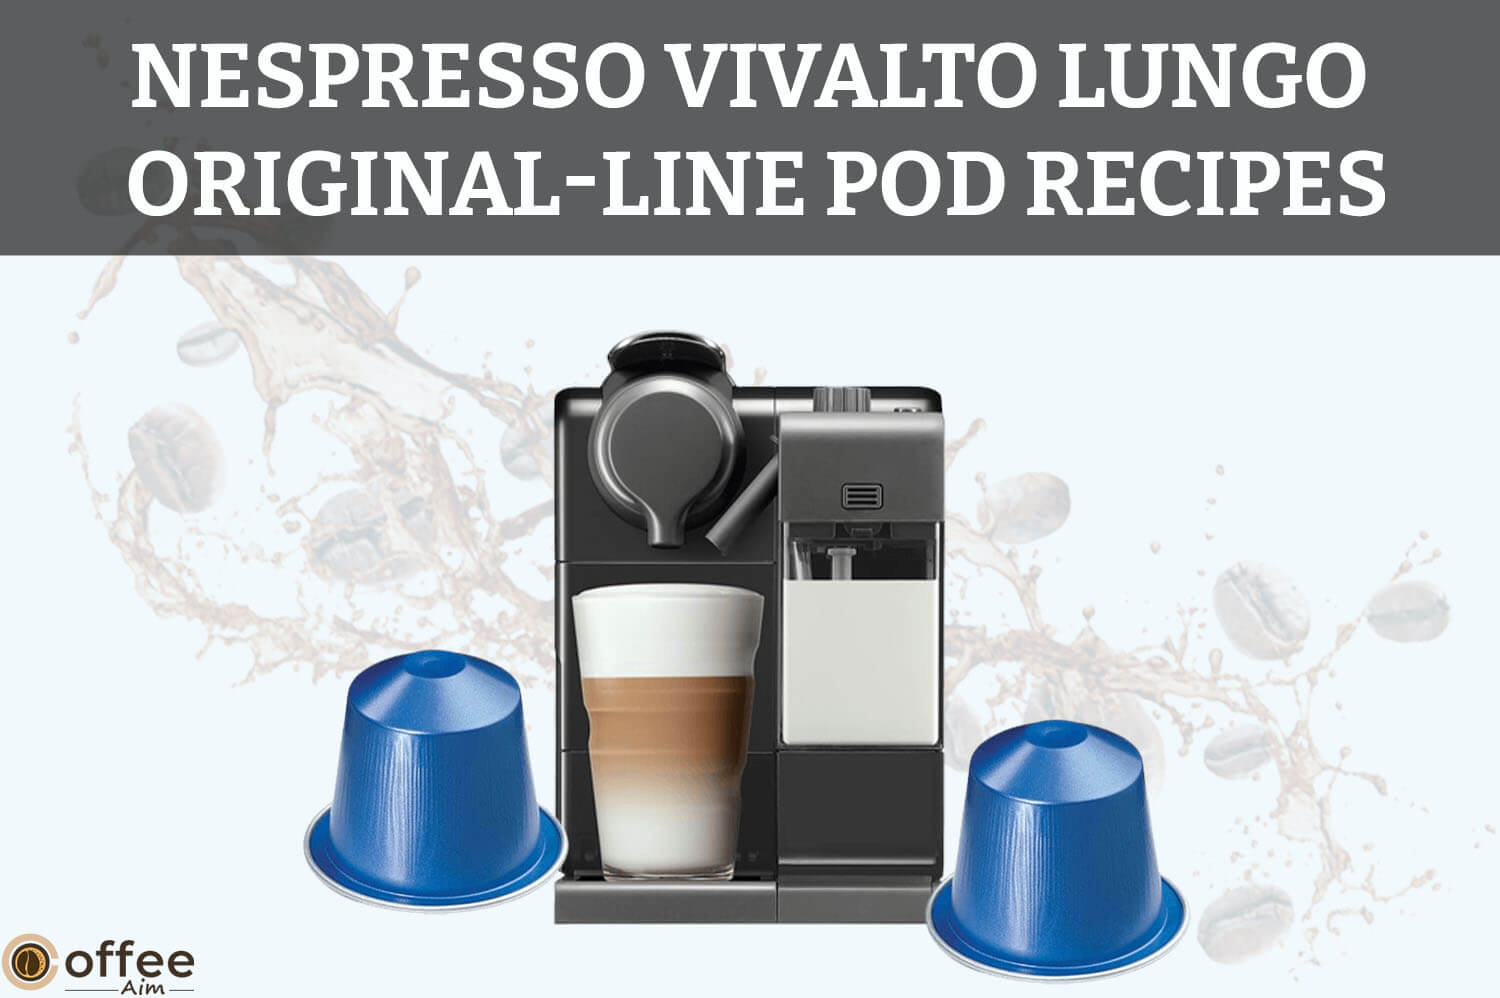 Featured image for the article "Nespresso Vivalto Lungo Original-Line Pod Recipes"